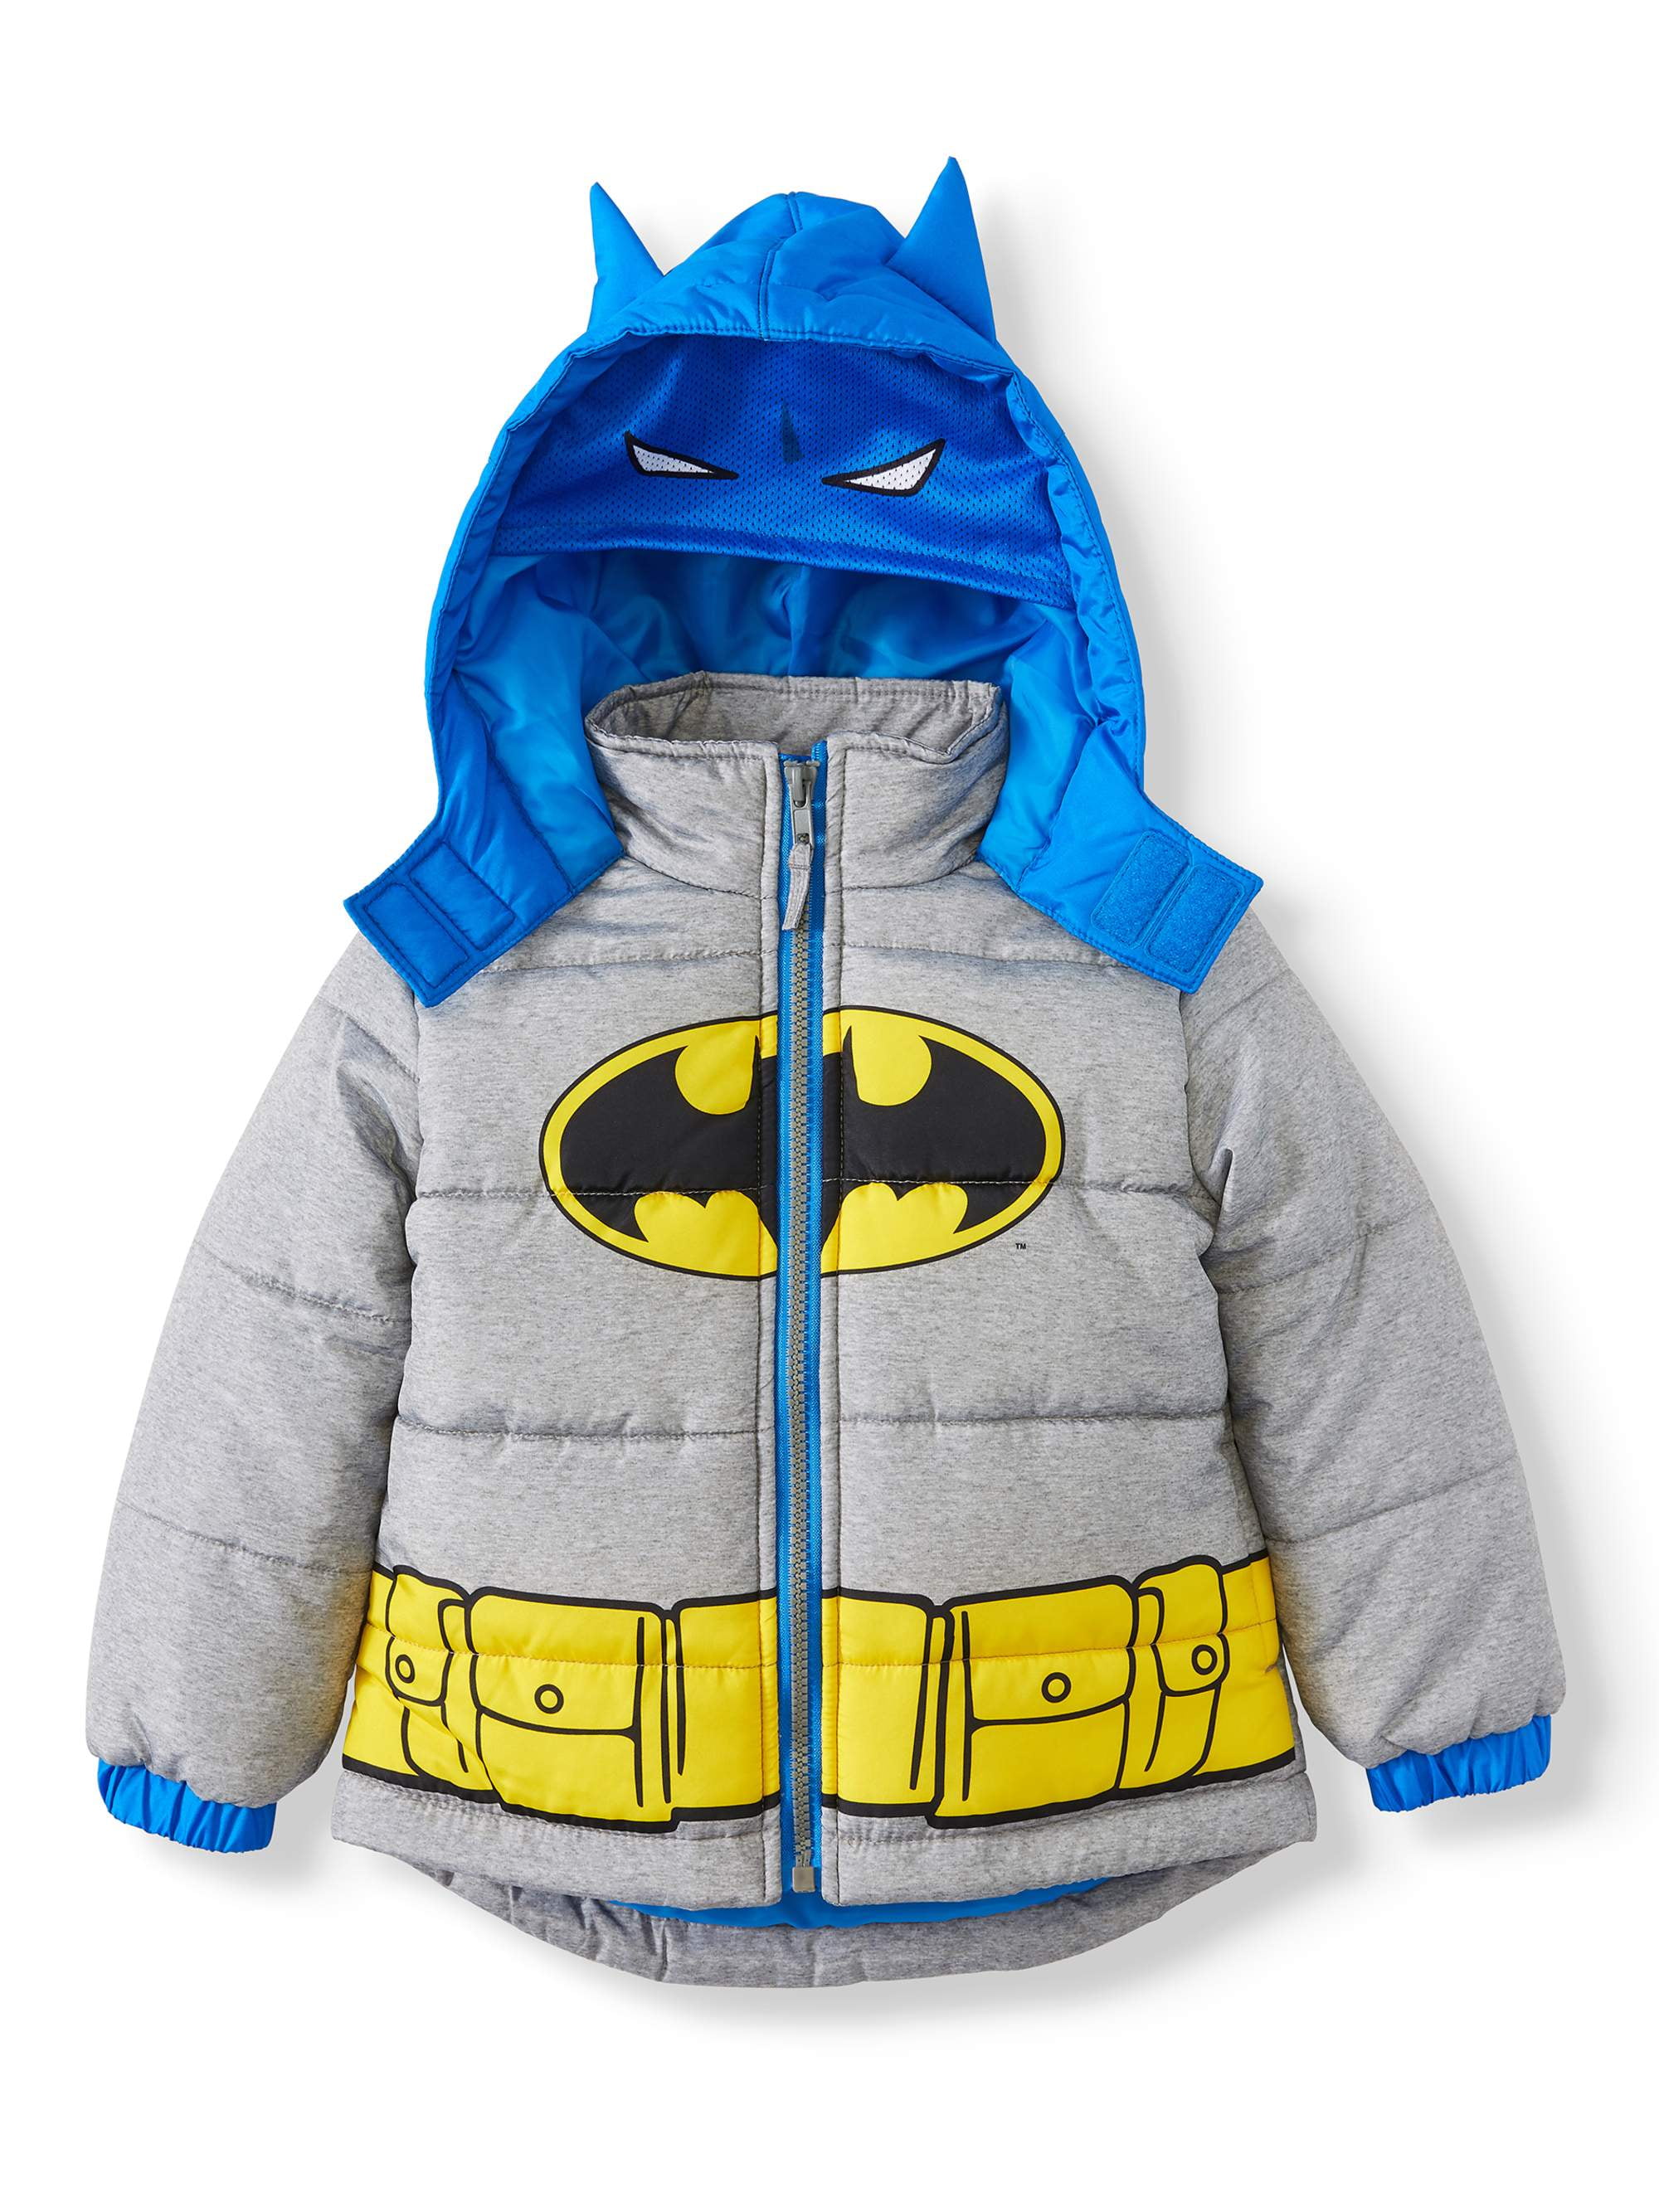 DC Comics Batman Toddler Boy Costume 